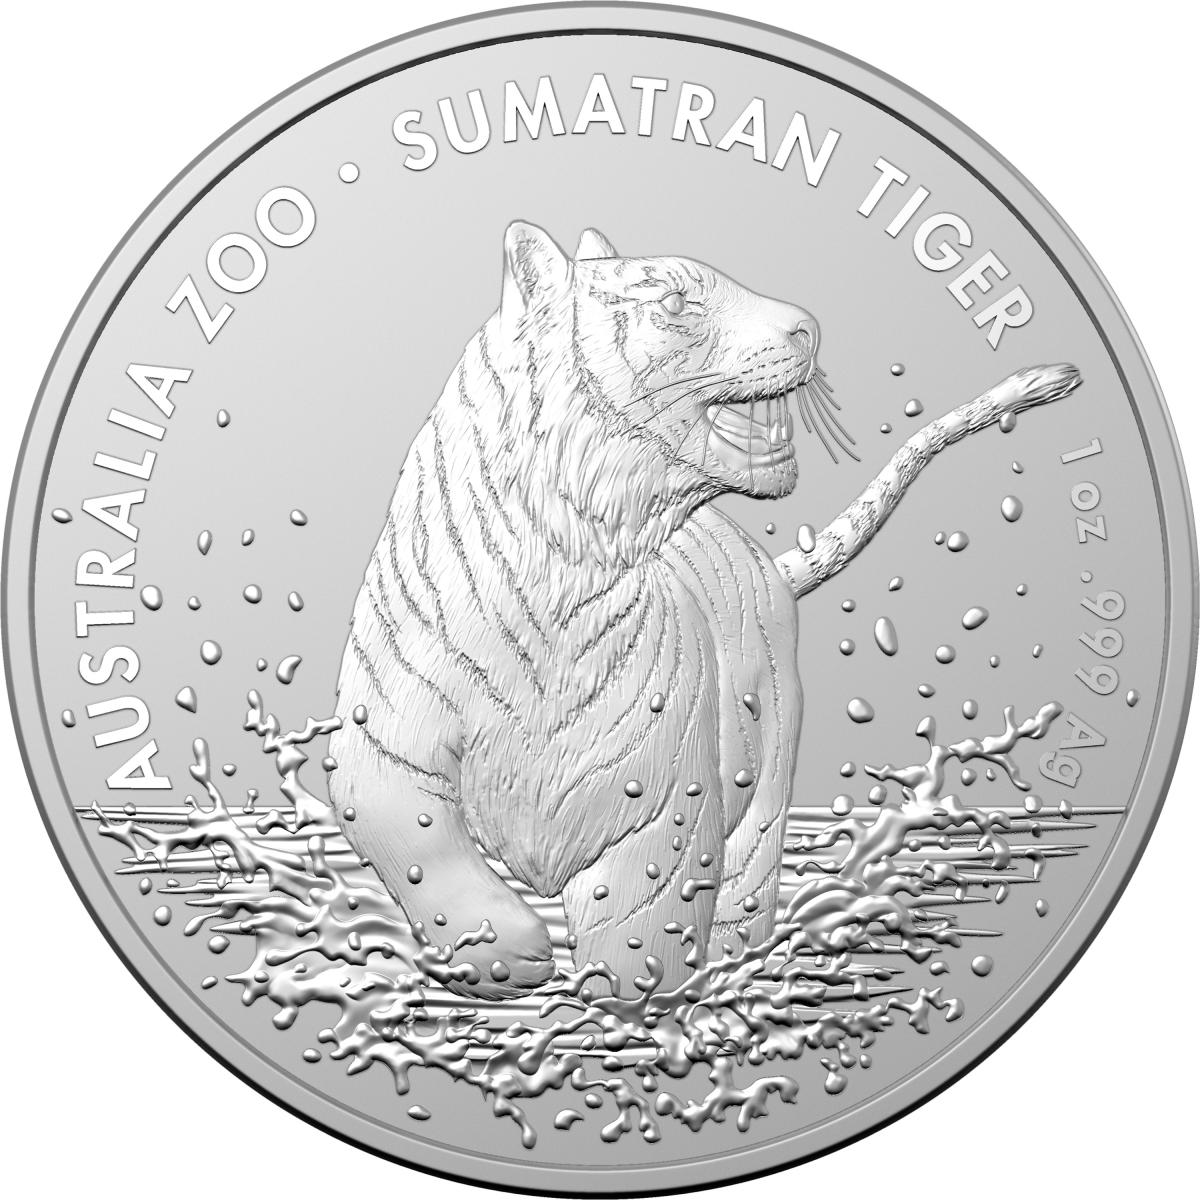 Thumbnail for 2020 1oz Silver Australian Zoo Sumatran Tiger  - Royal Australian Mint Issue